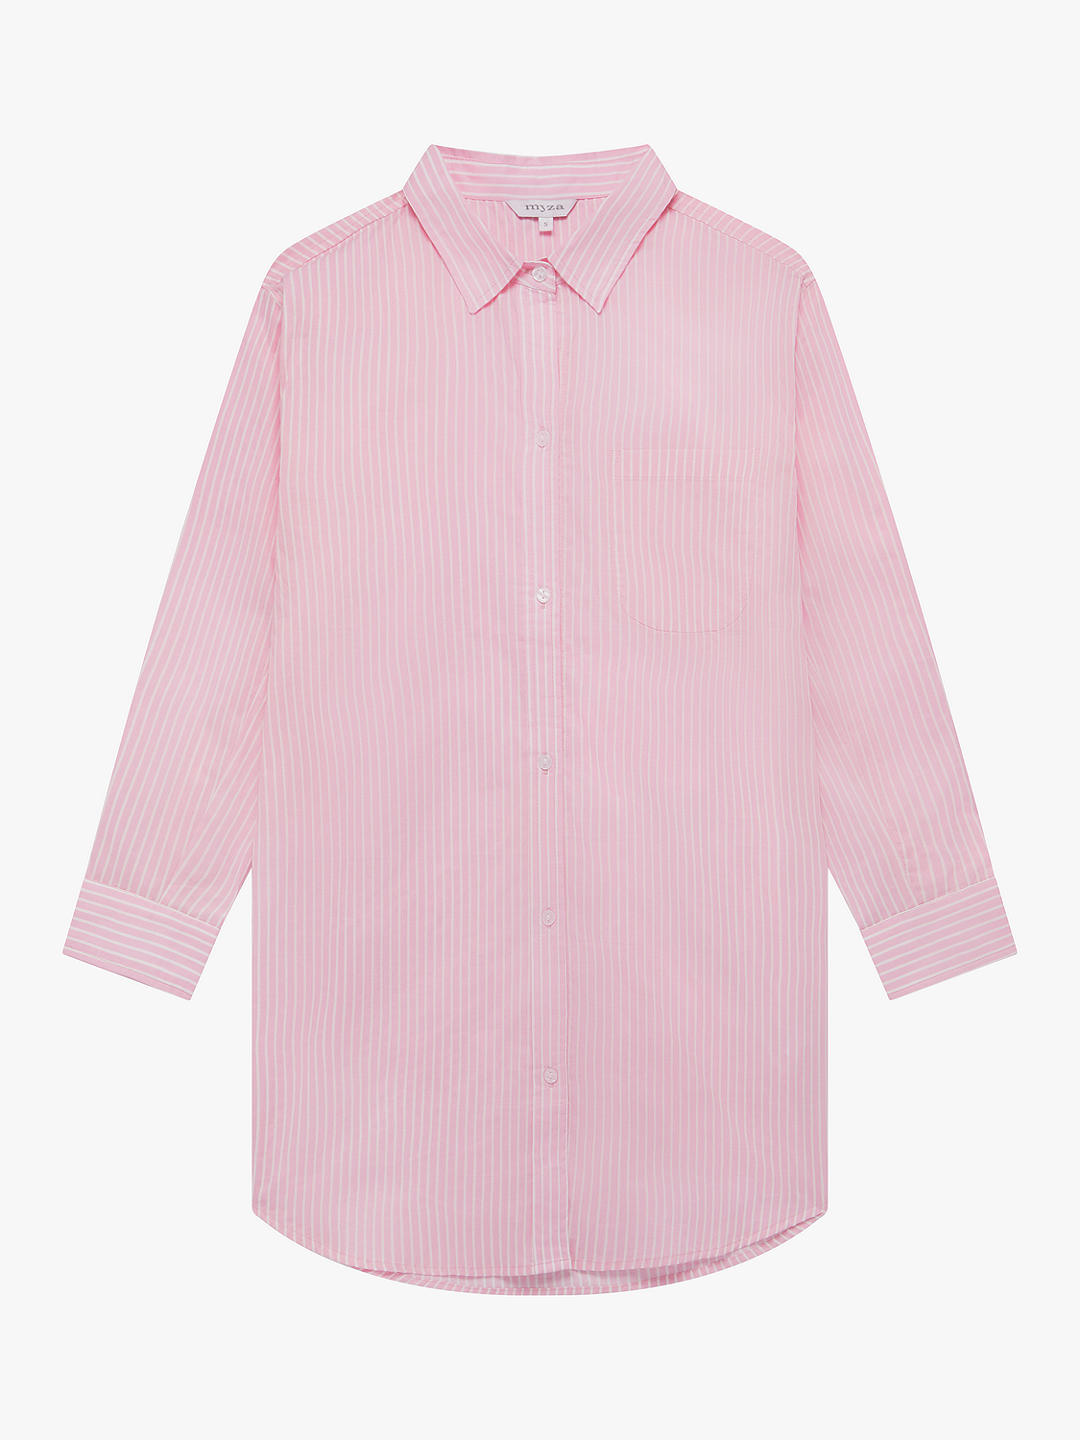 myza Striped Organic Cotton Nightshirt, Pink/White